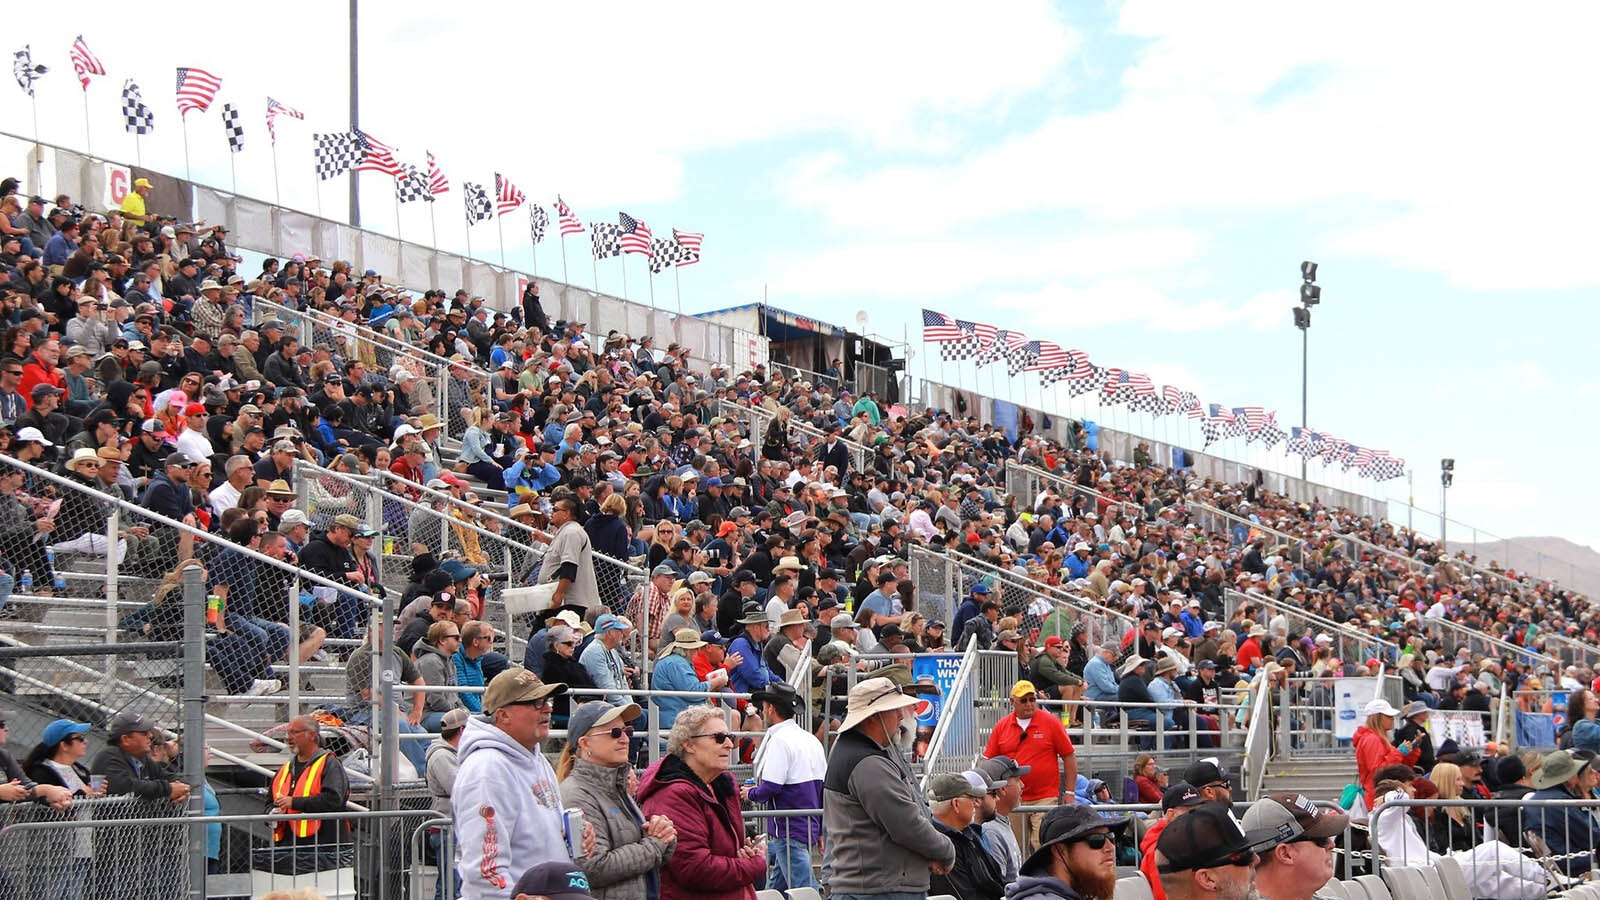 The National Championship Air Races draws big crowds.